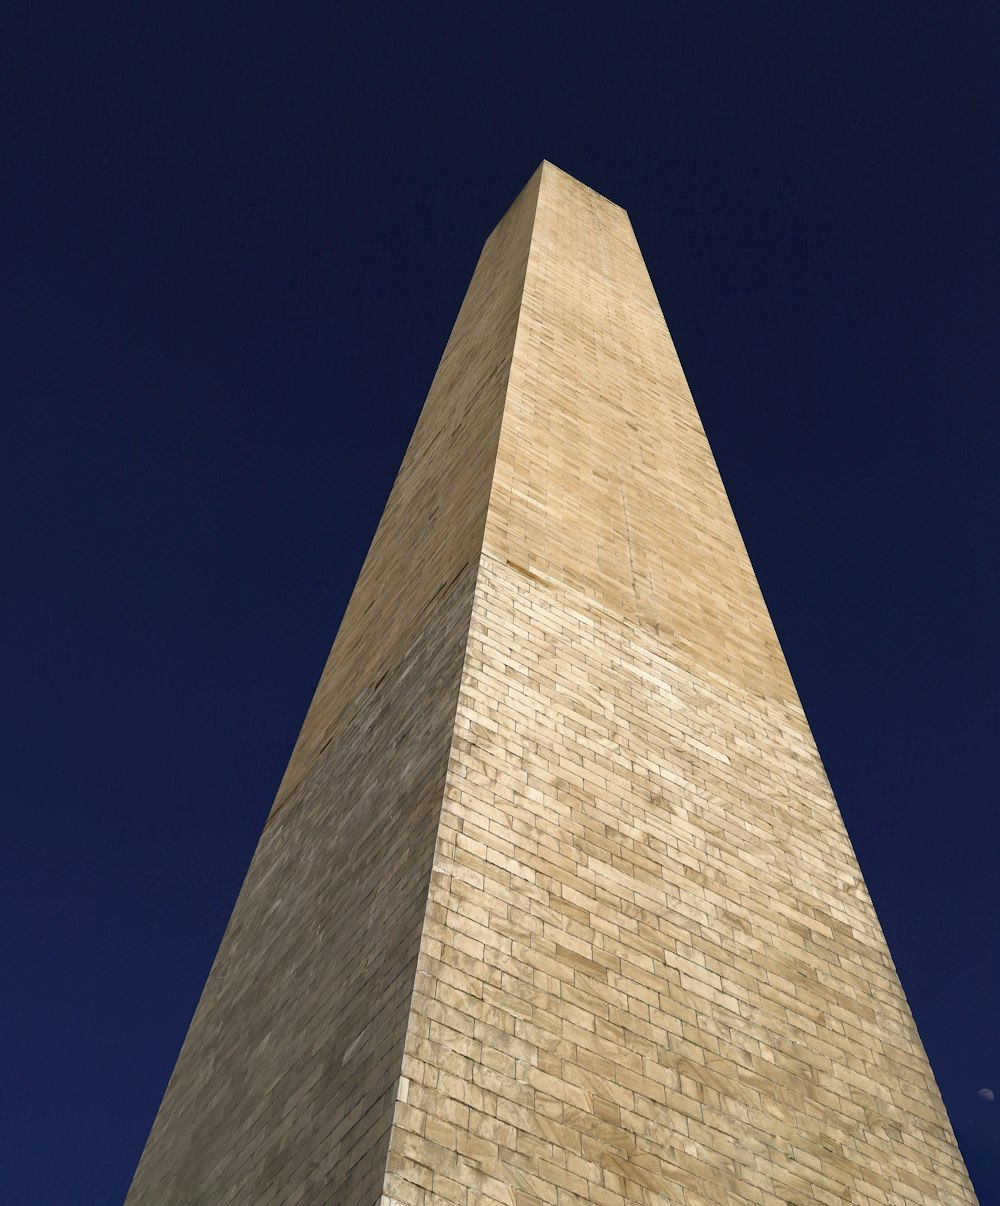 a tall brick tower